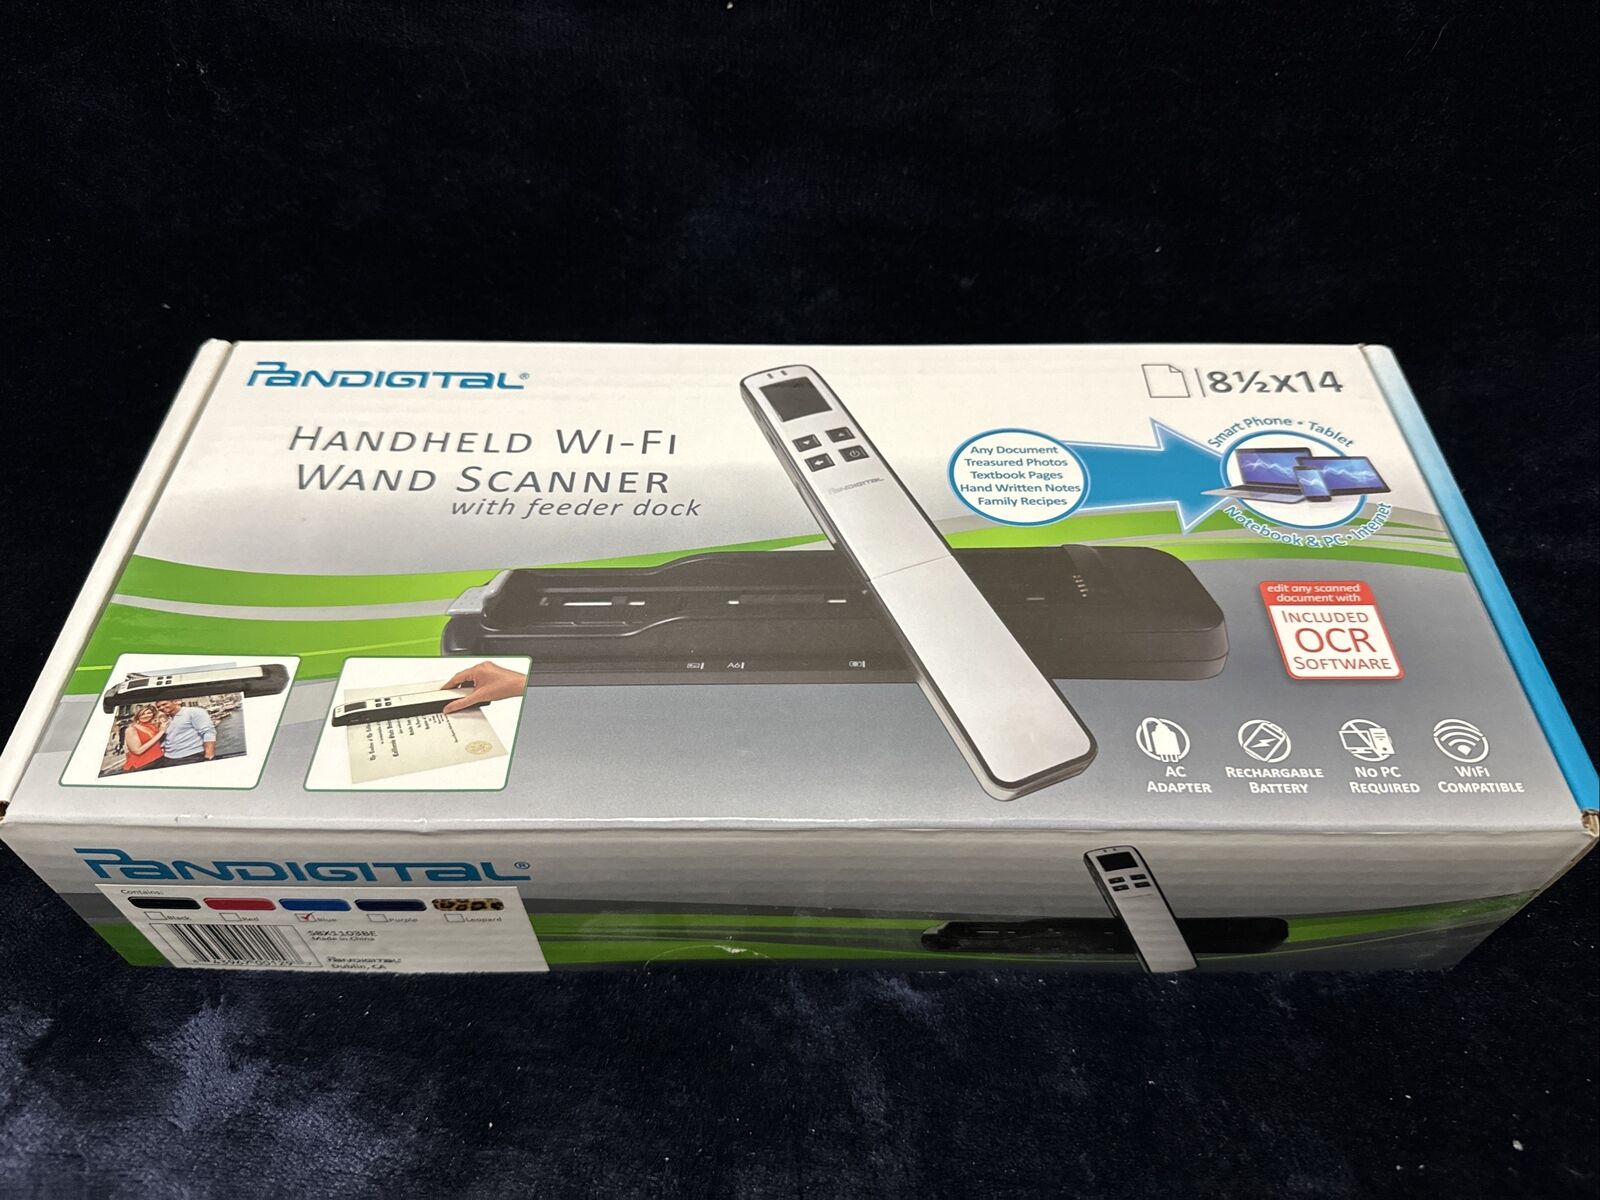 Pandigital Handheld Wi-Fi Blue Wand Scanner with Feeder Dock S8X1103 BE